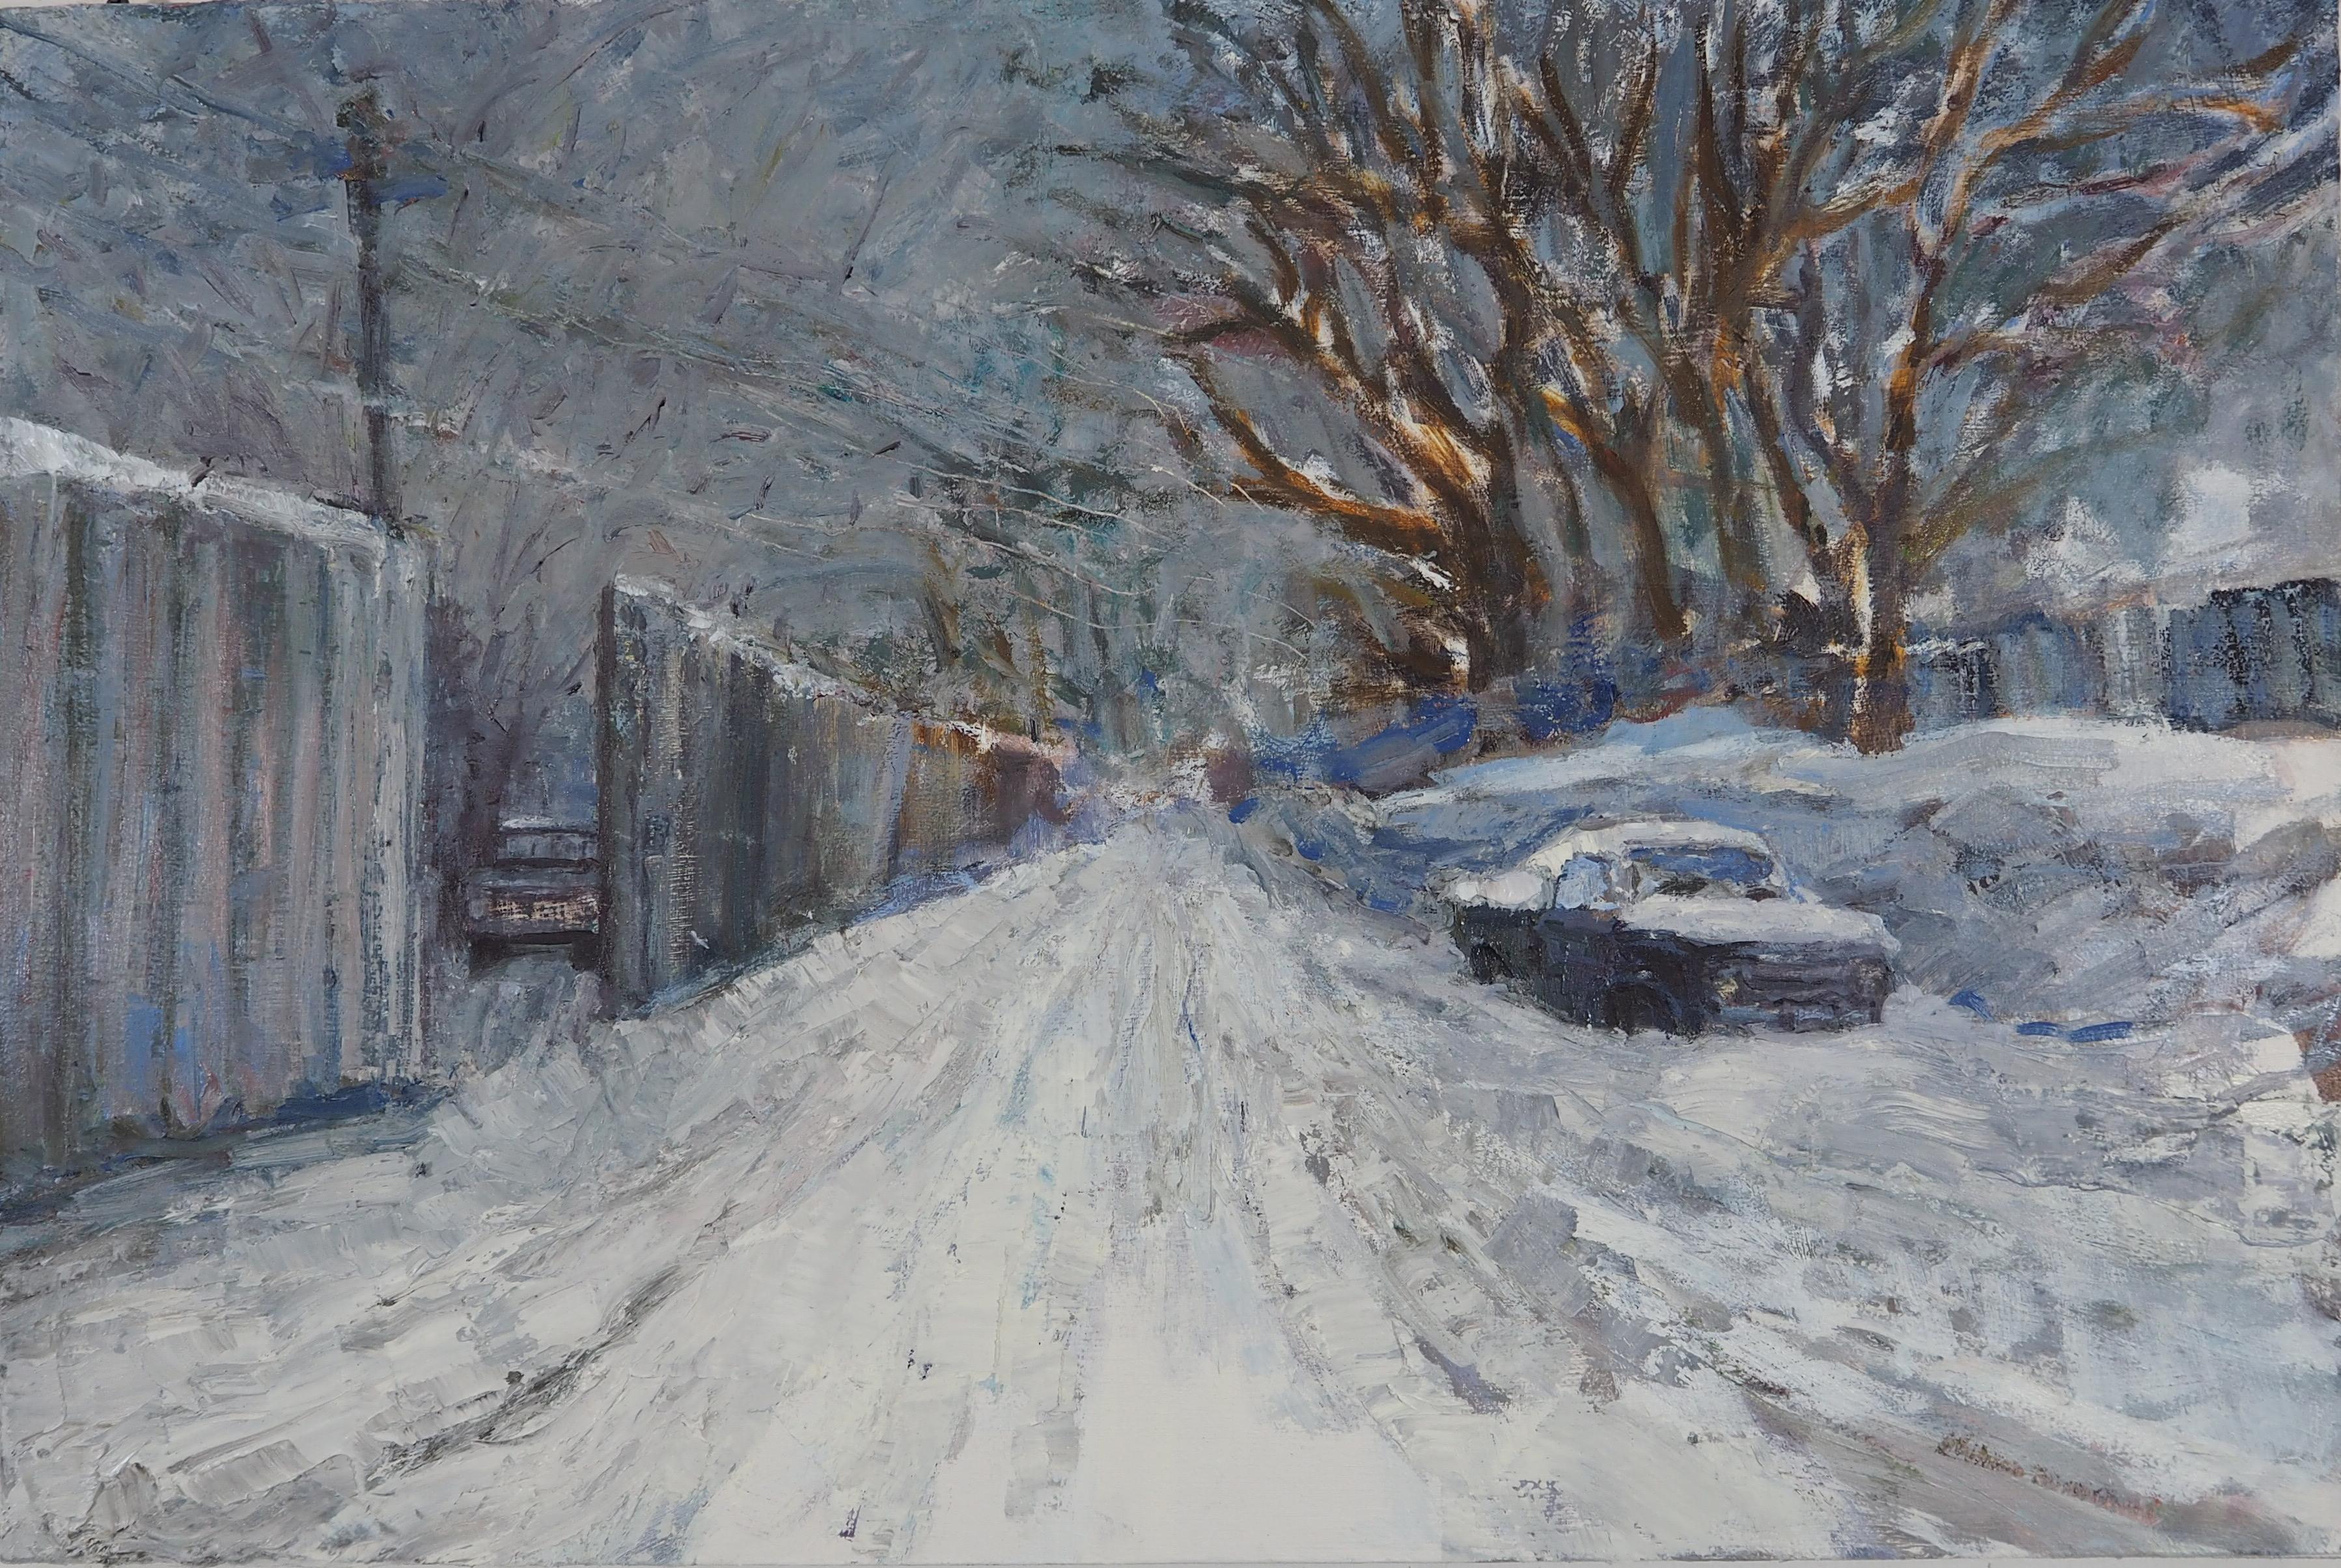 Christopher Lowry Johnson Landscape Painting - "Sunnyside Snow" Contemporary Impressionist Winter Urban Landscape